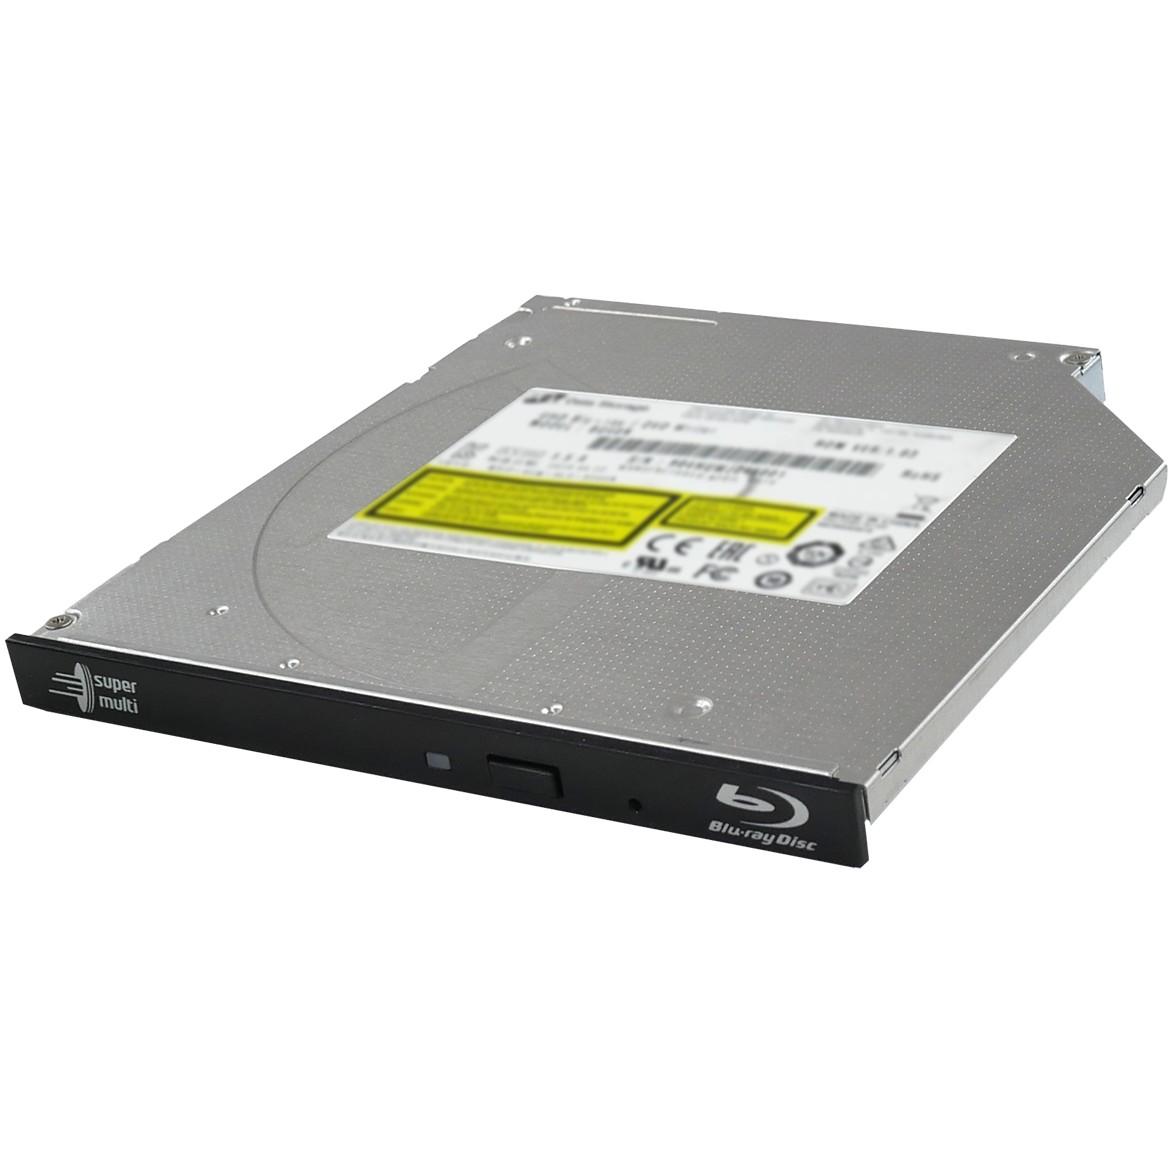 Hitachi-LG Super Multi UHD-BD Writer optical disc drive